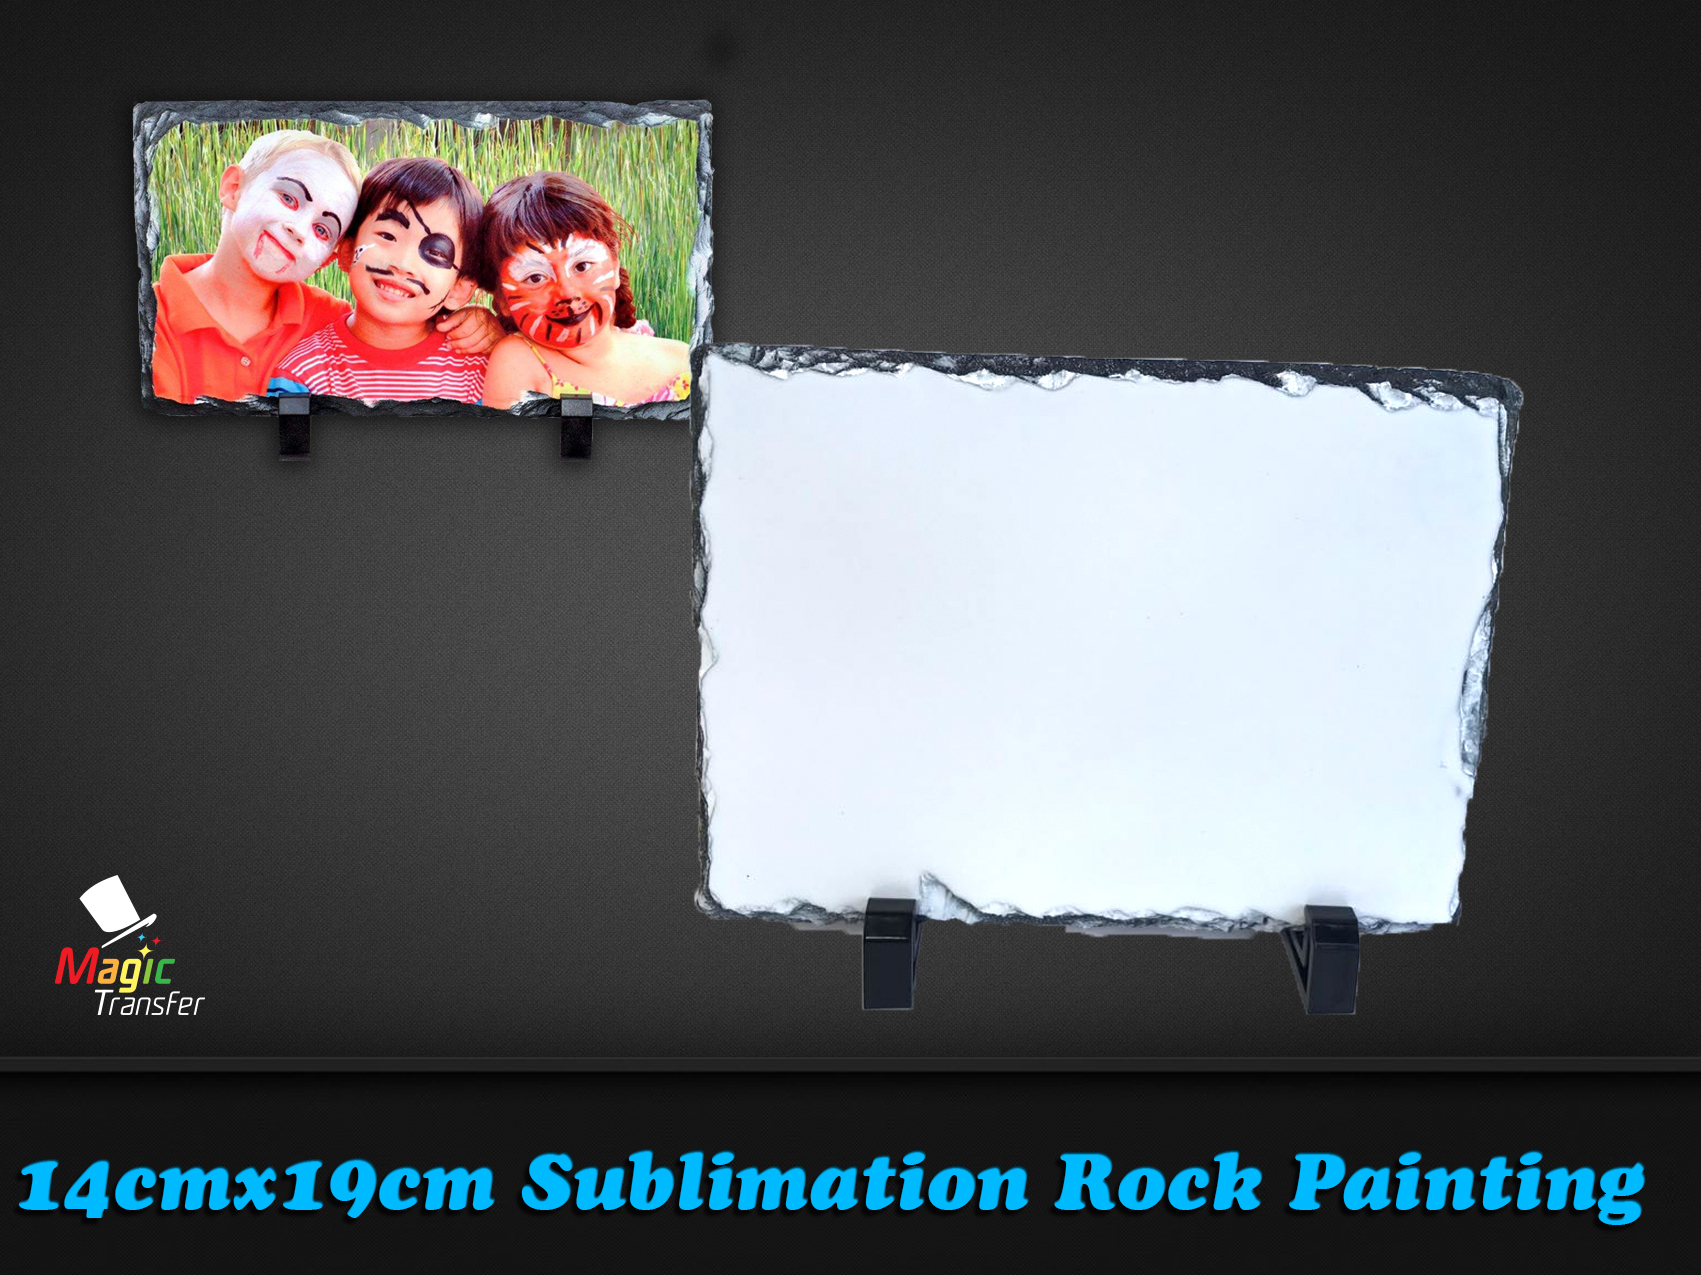 Dye sublimation matte white coated photo slate 14cm x 14cm